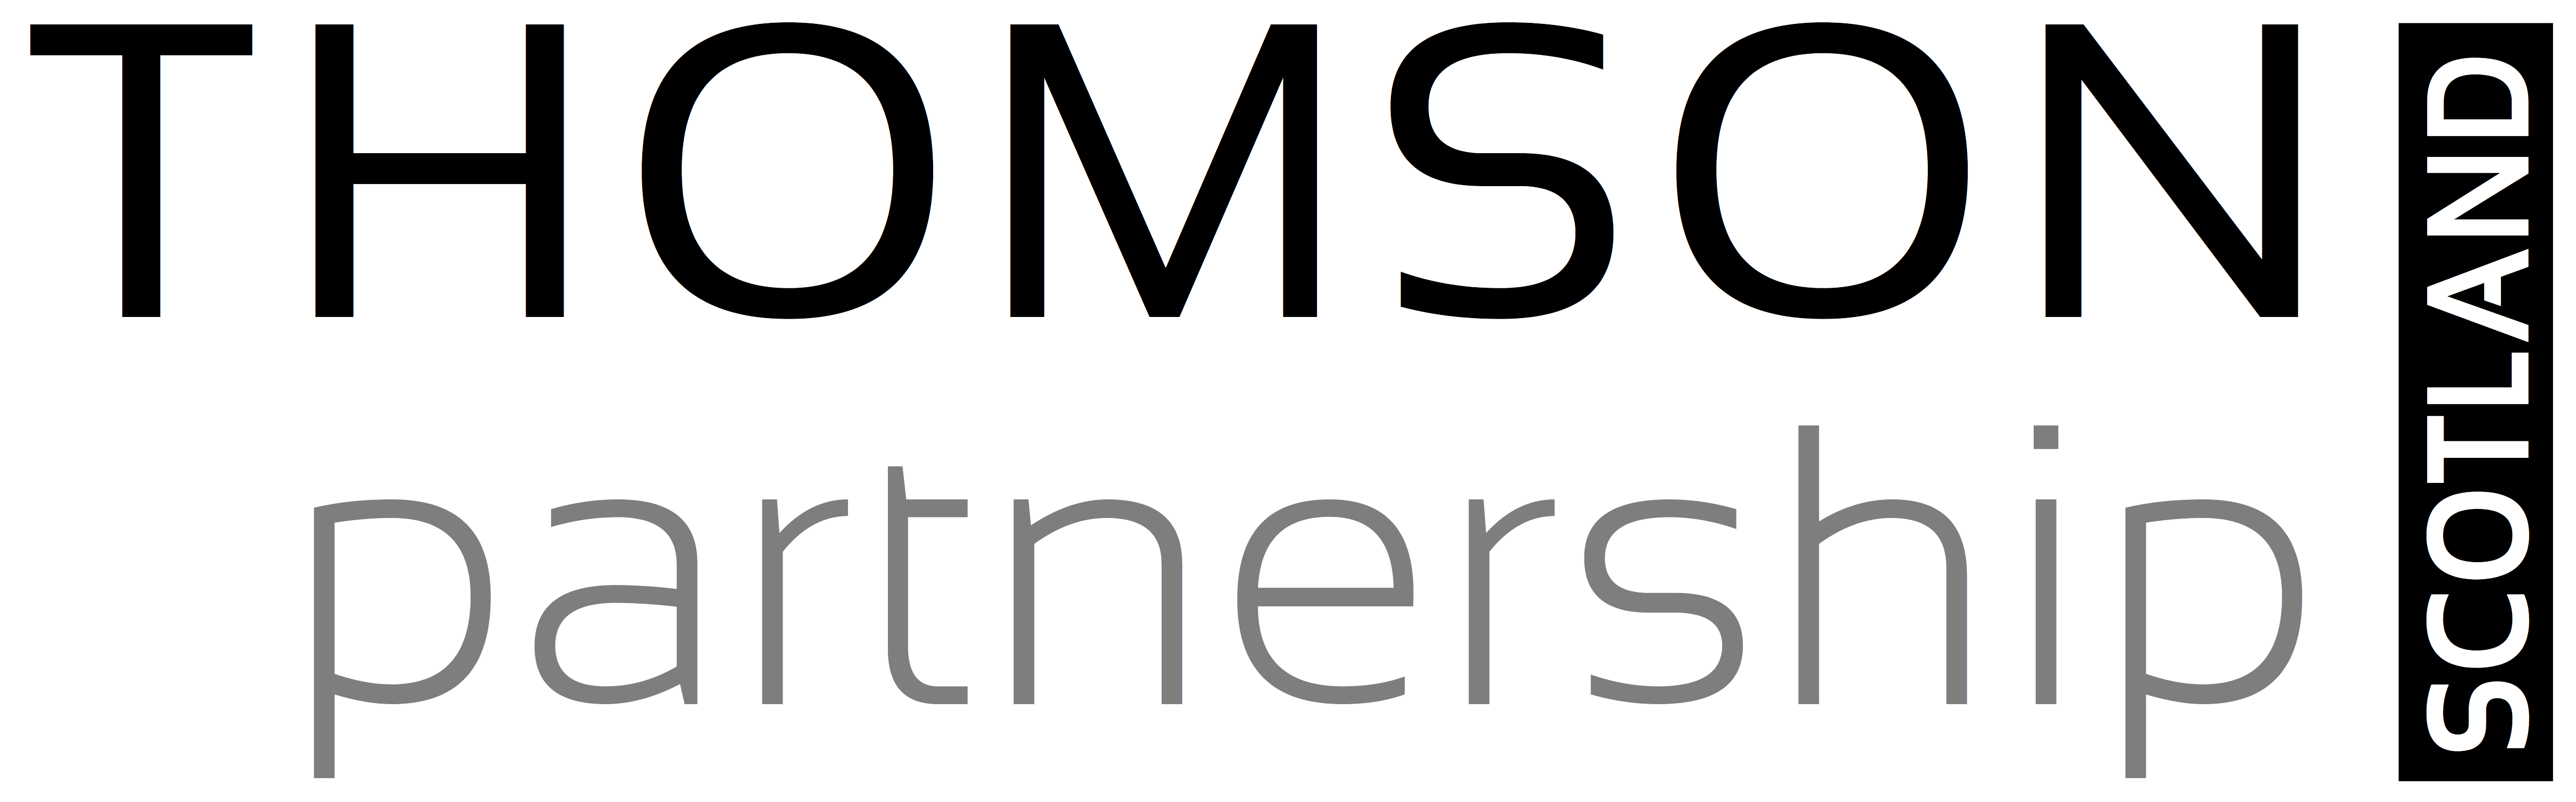 Thomson Partnership Scotland Logo